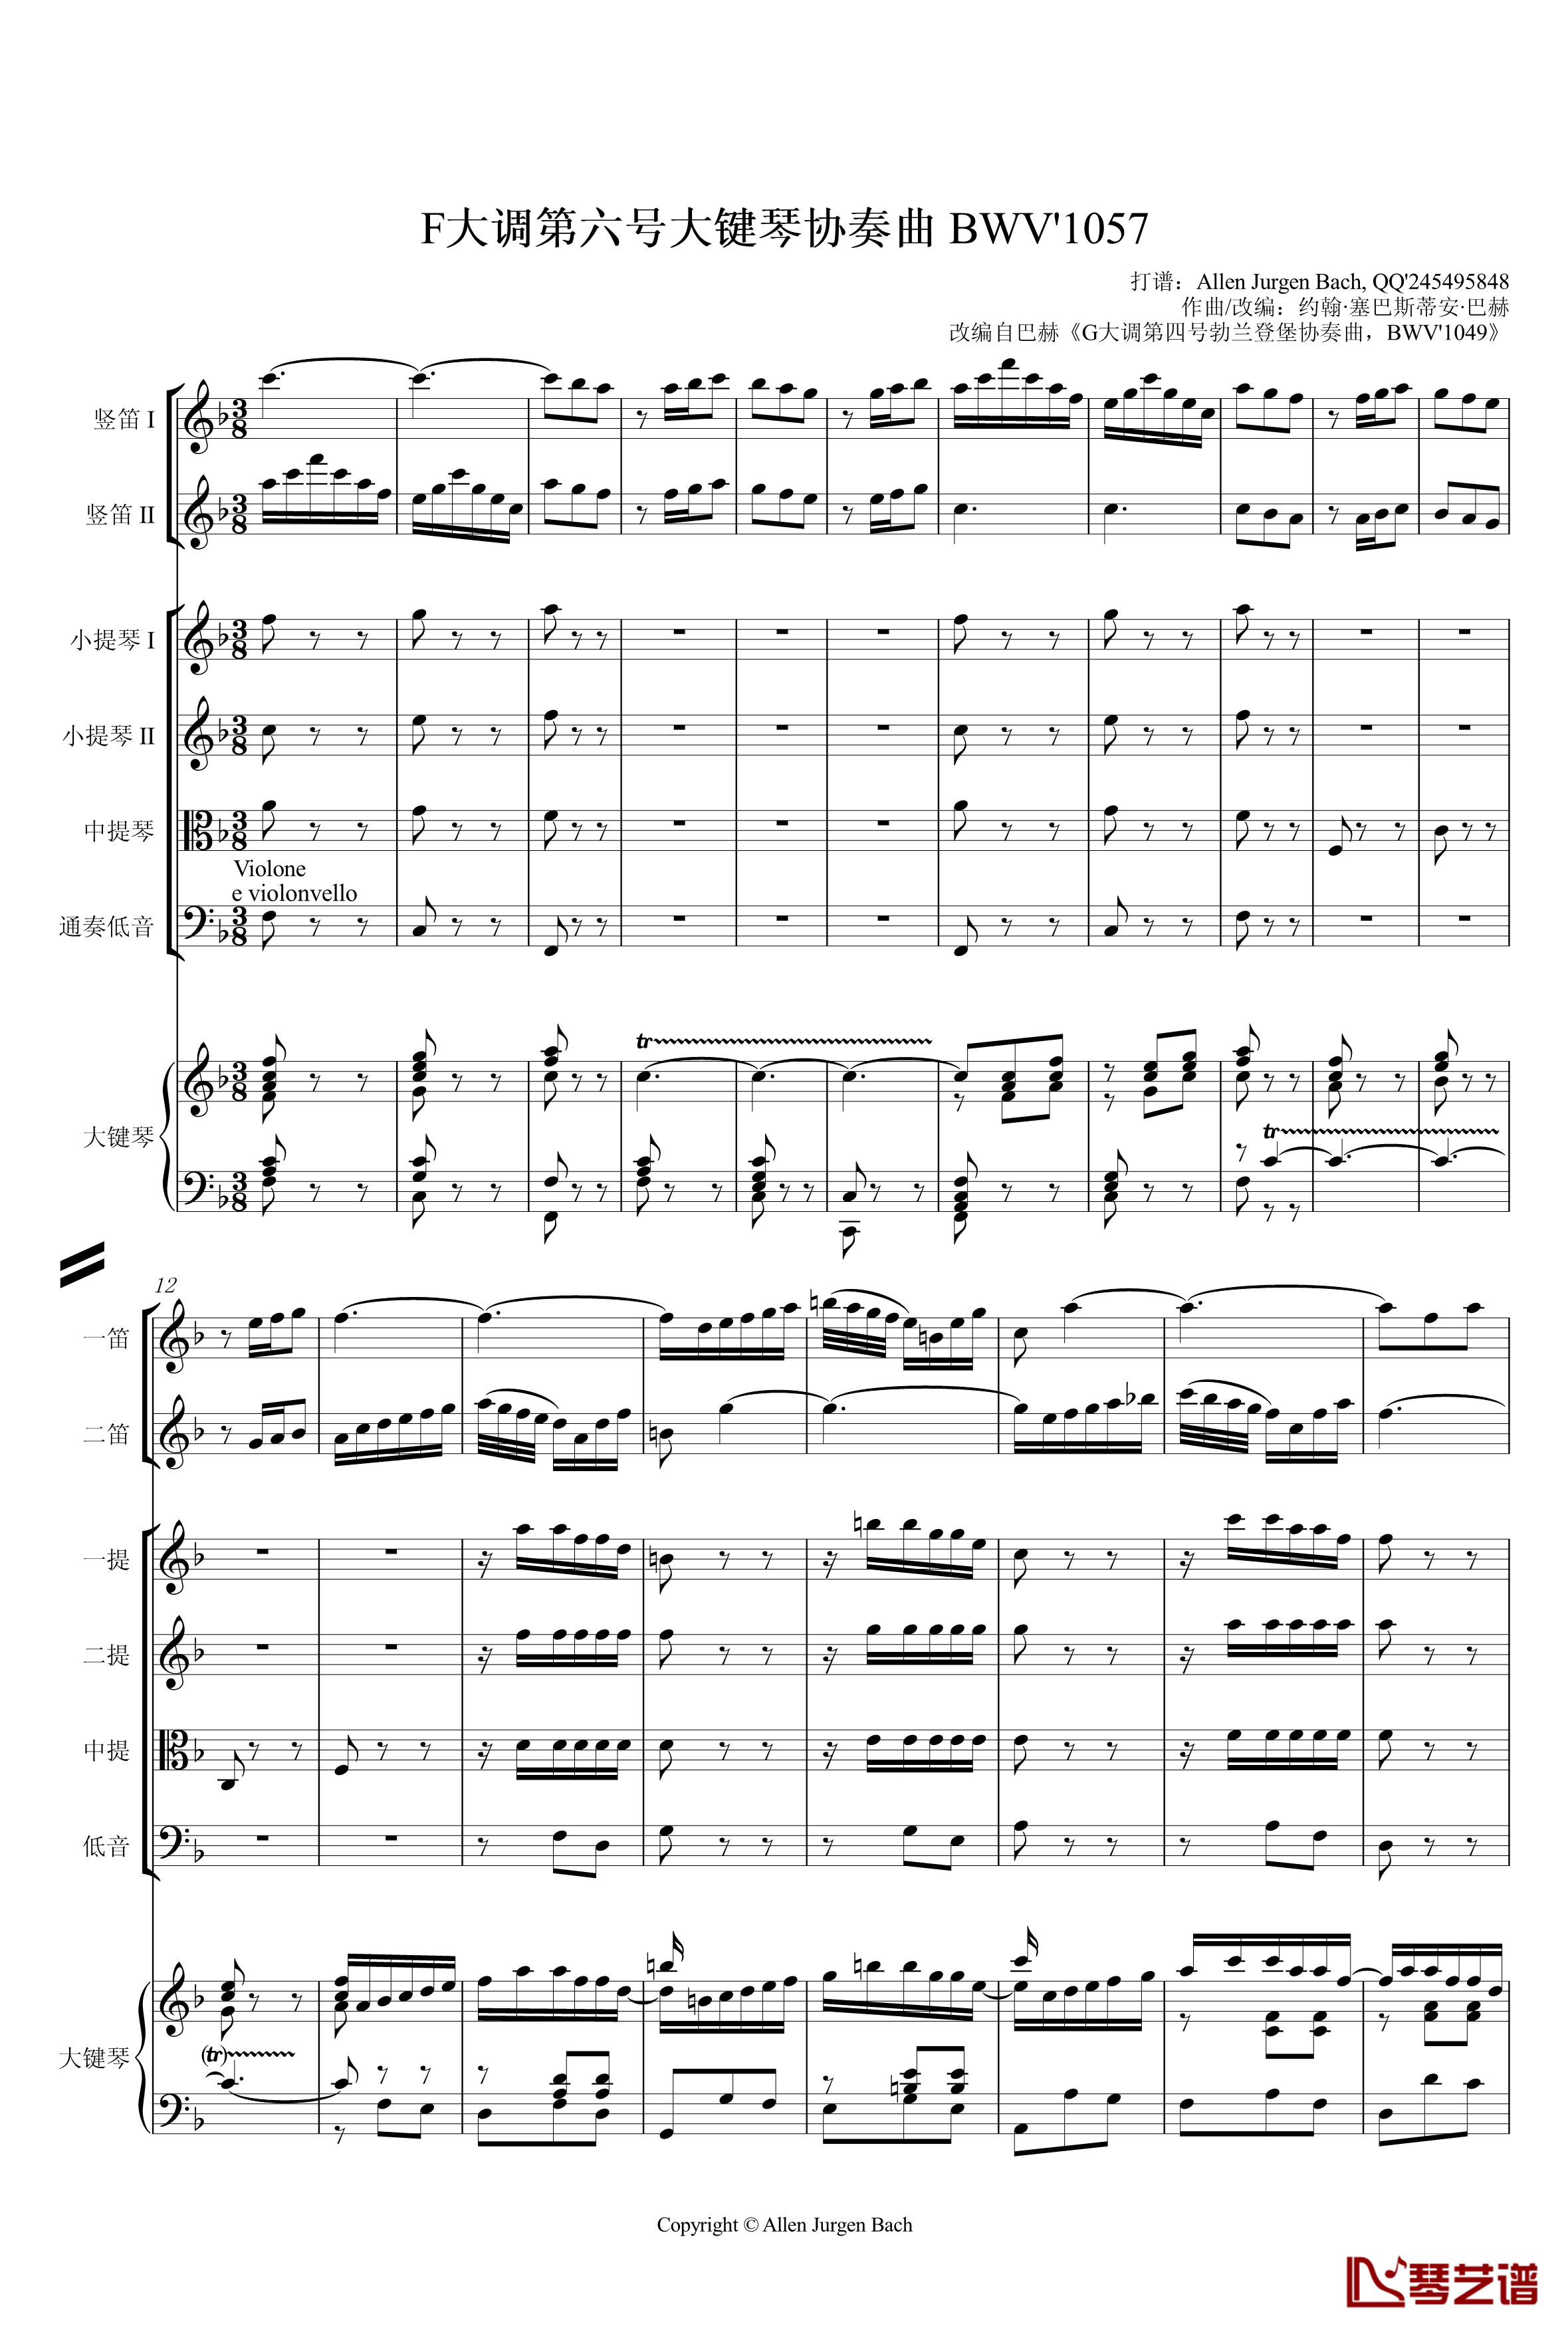 F大调第六号钢琴协奏曲钢琴谱-第一乐章-巴哈-Bach, Johann Sebastian1